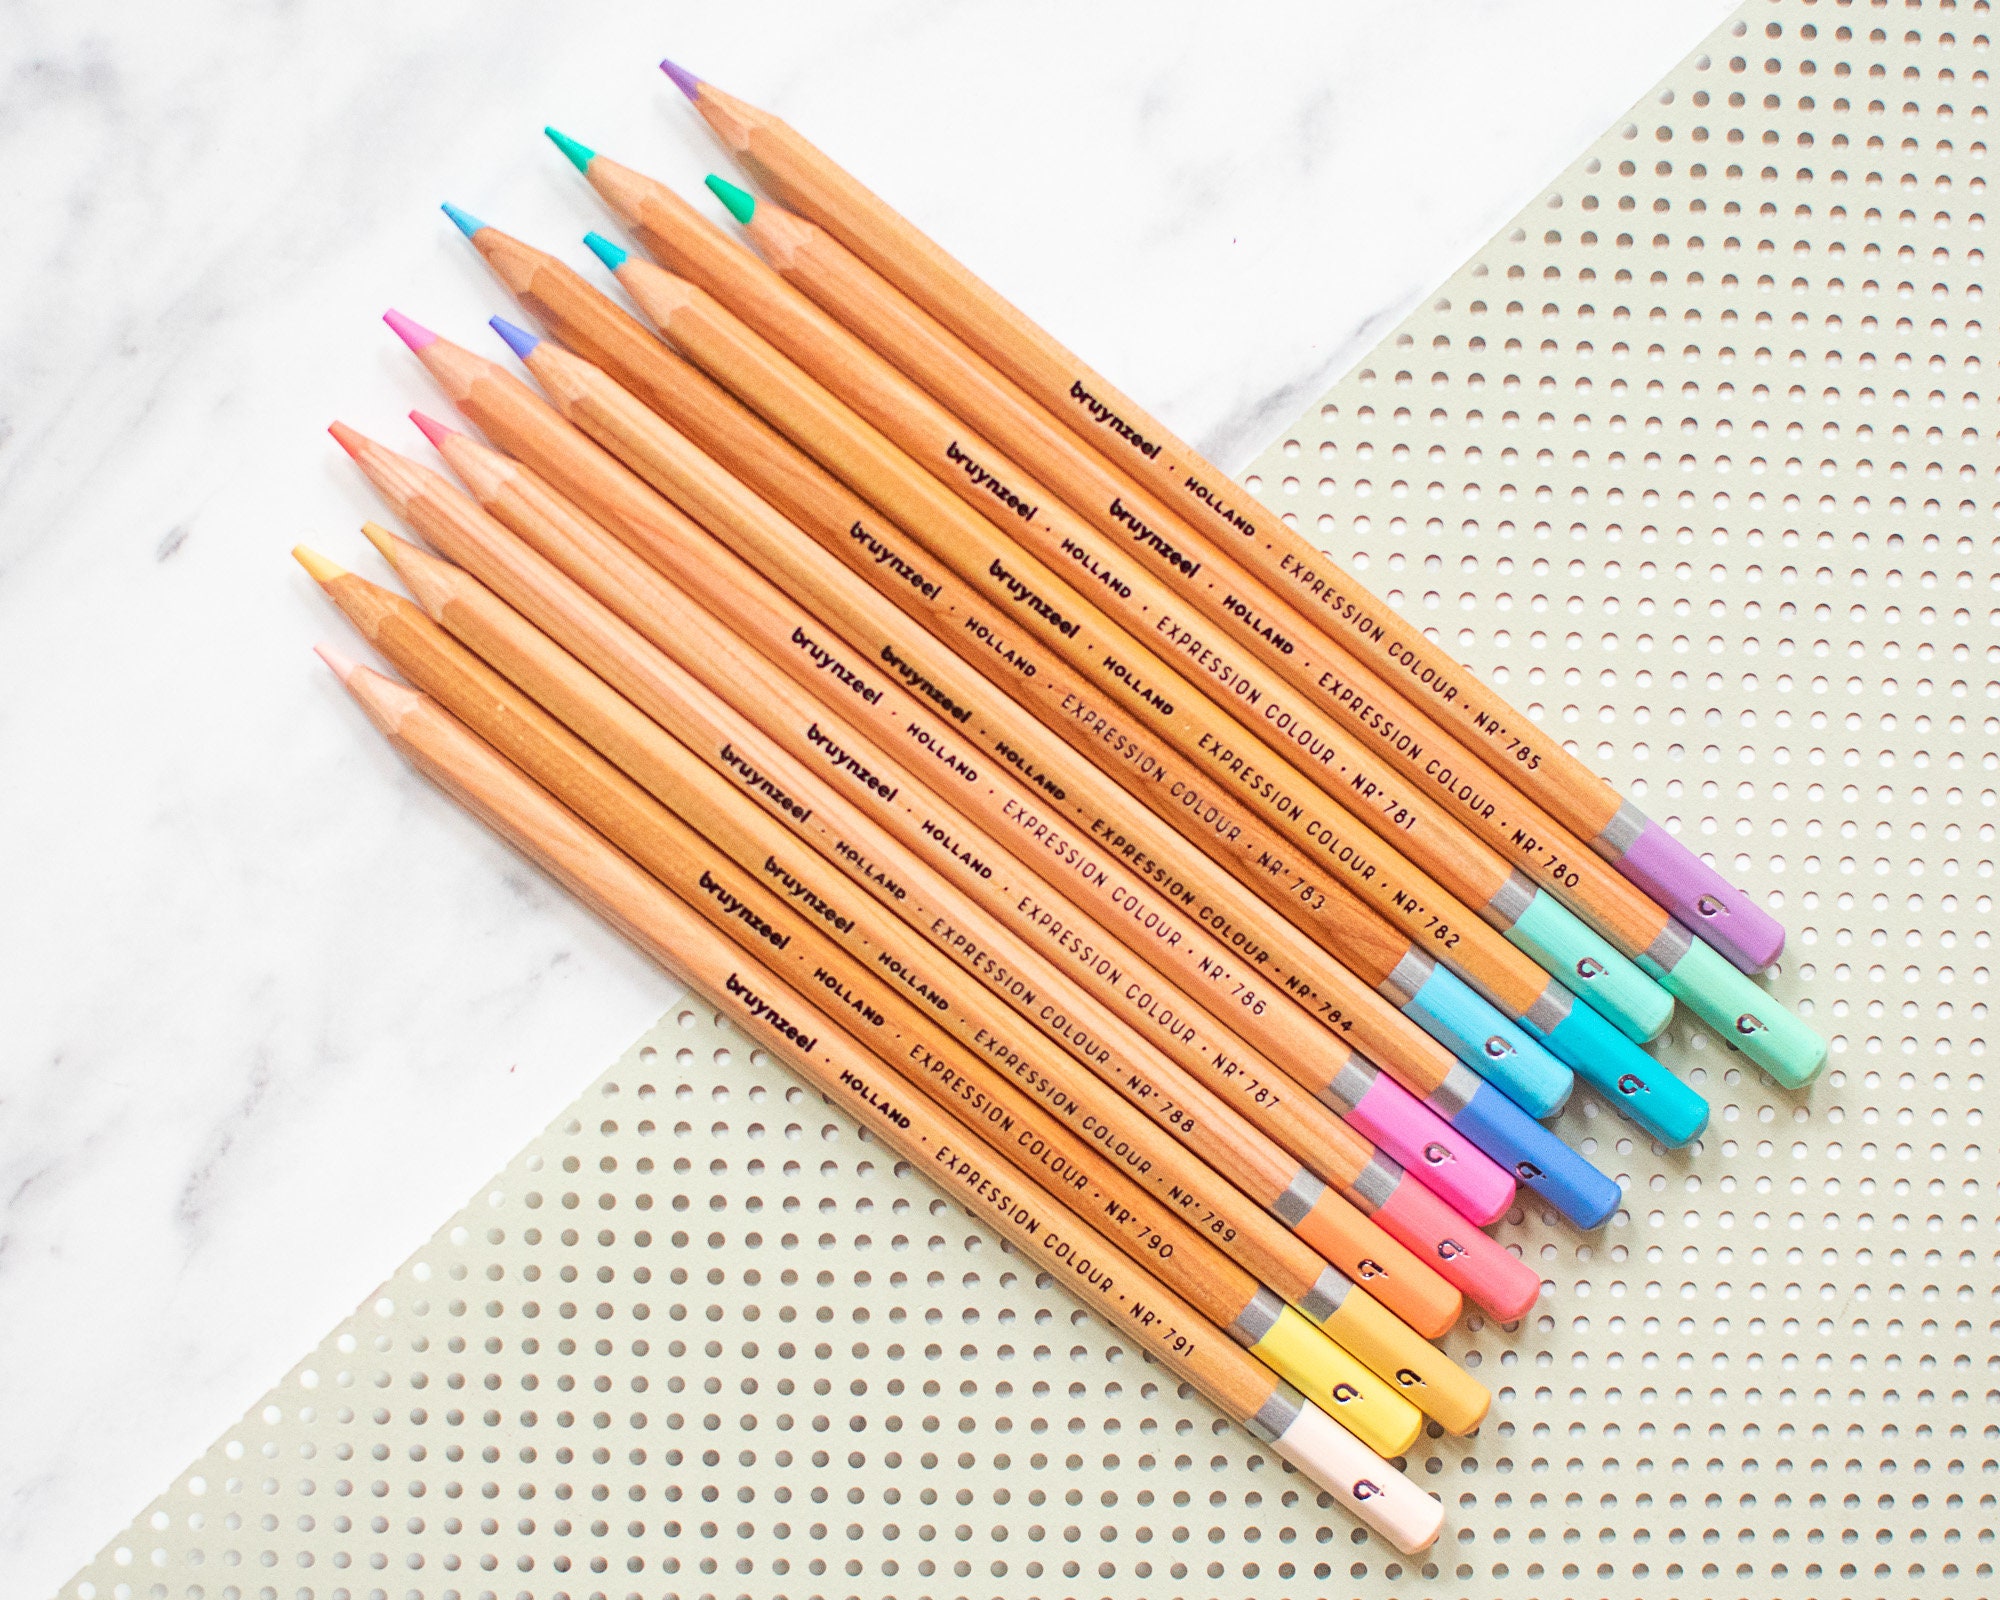 Bruynzeel Expression Colour Pencils 72 pcs Set